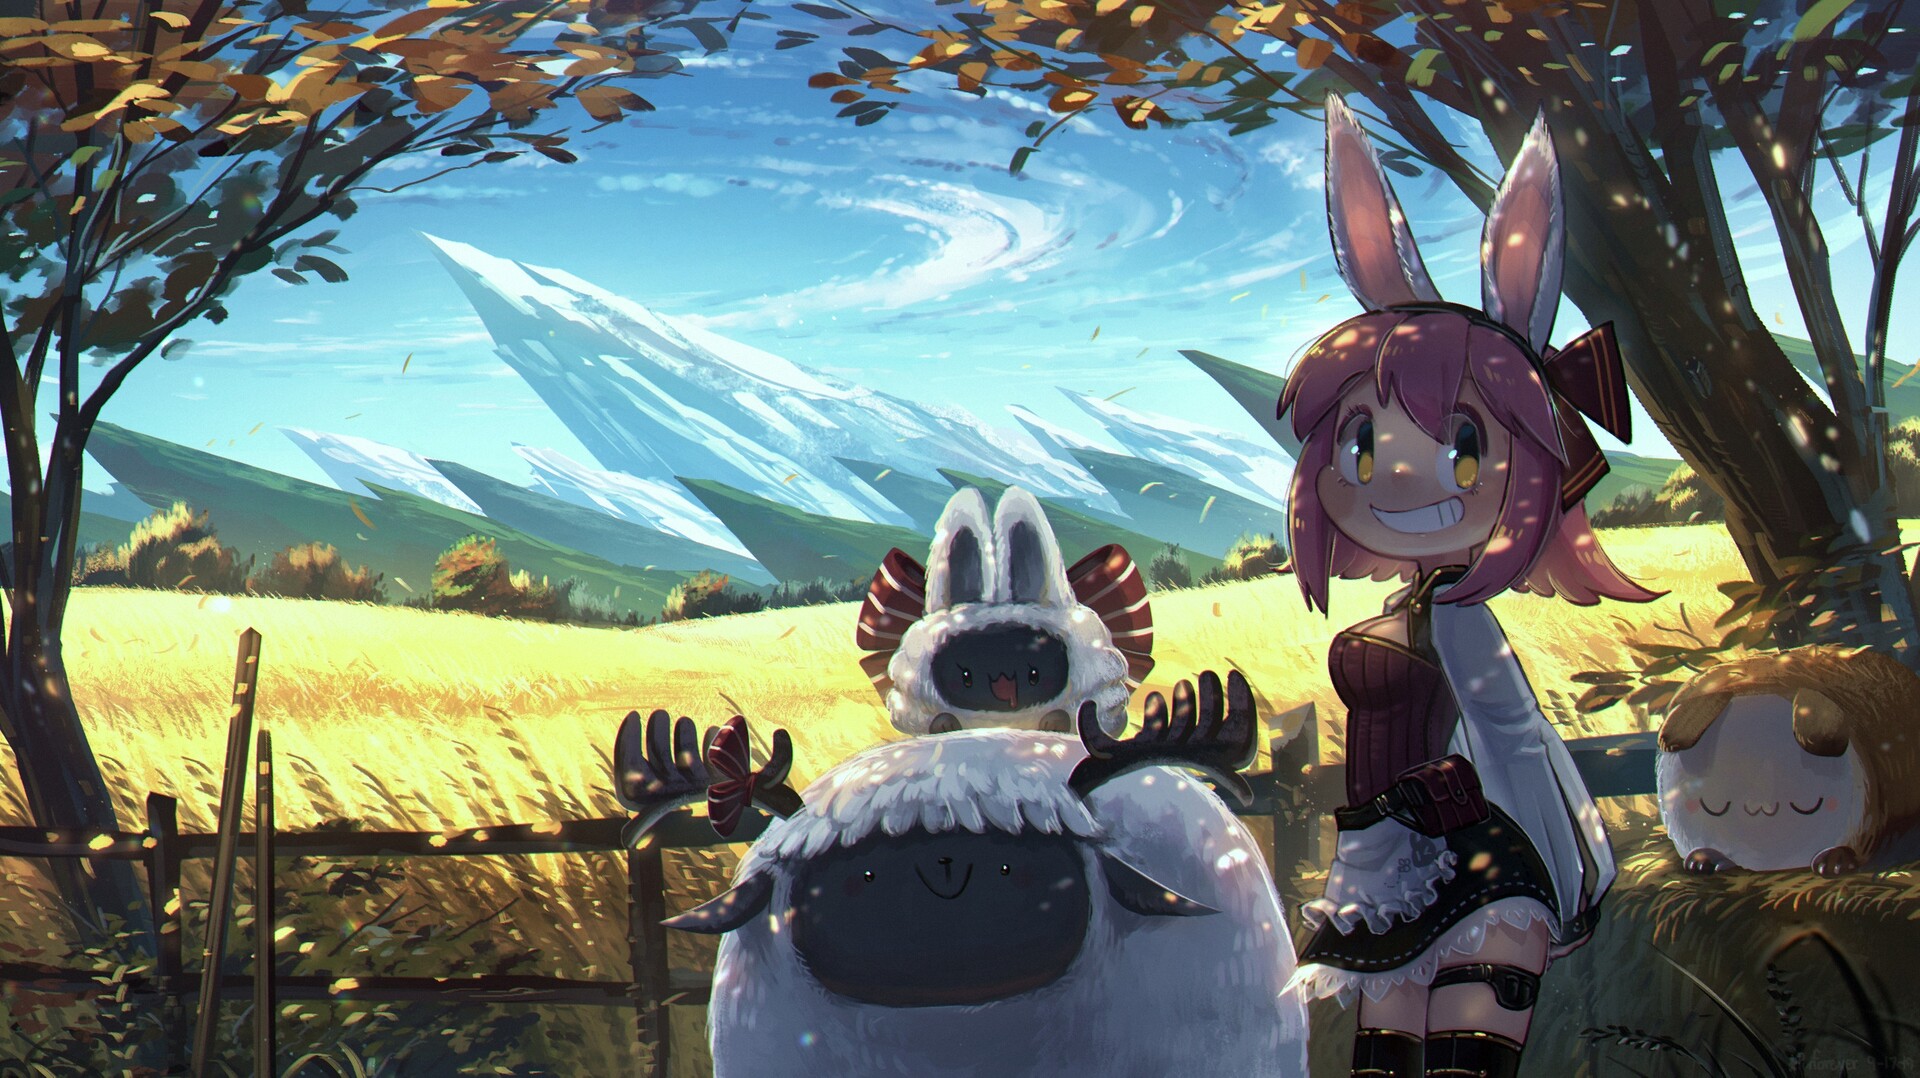 Anime 1920x1078 Porforever digital art fantasy art mountains bunny girl clouds wheat